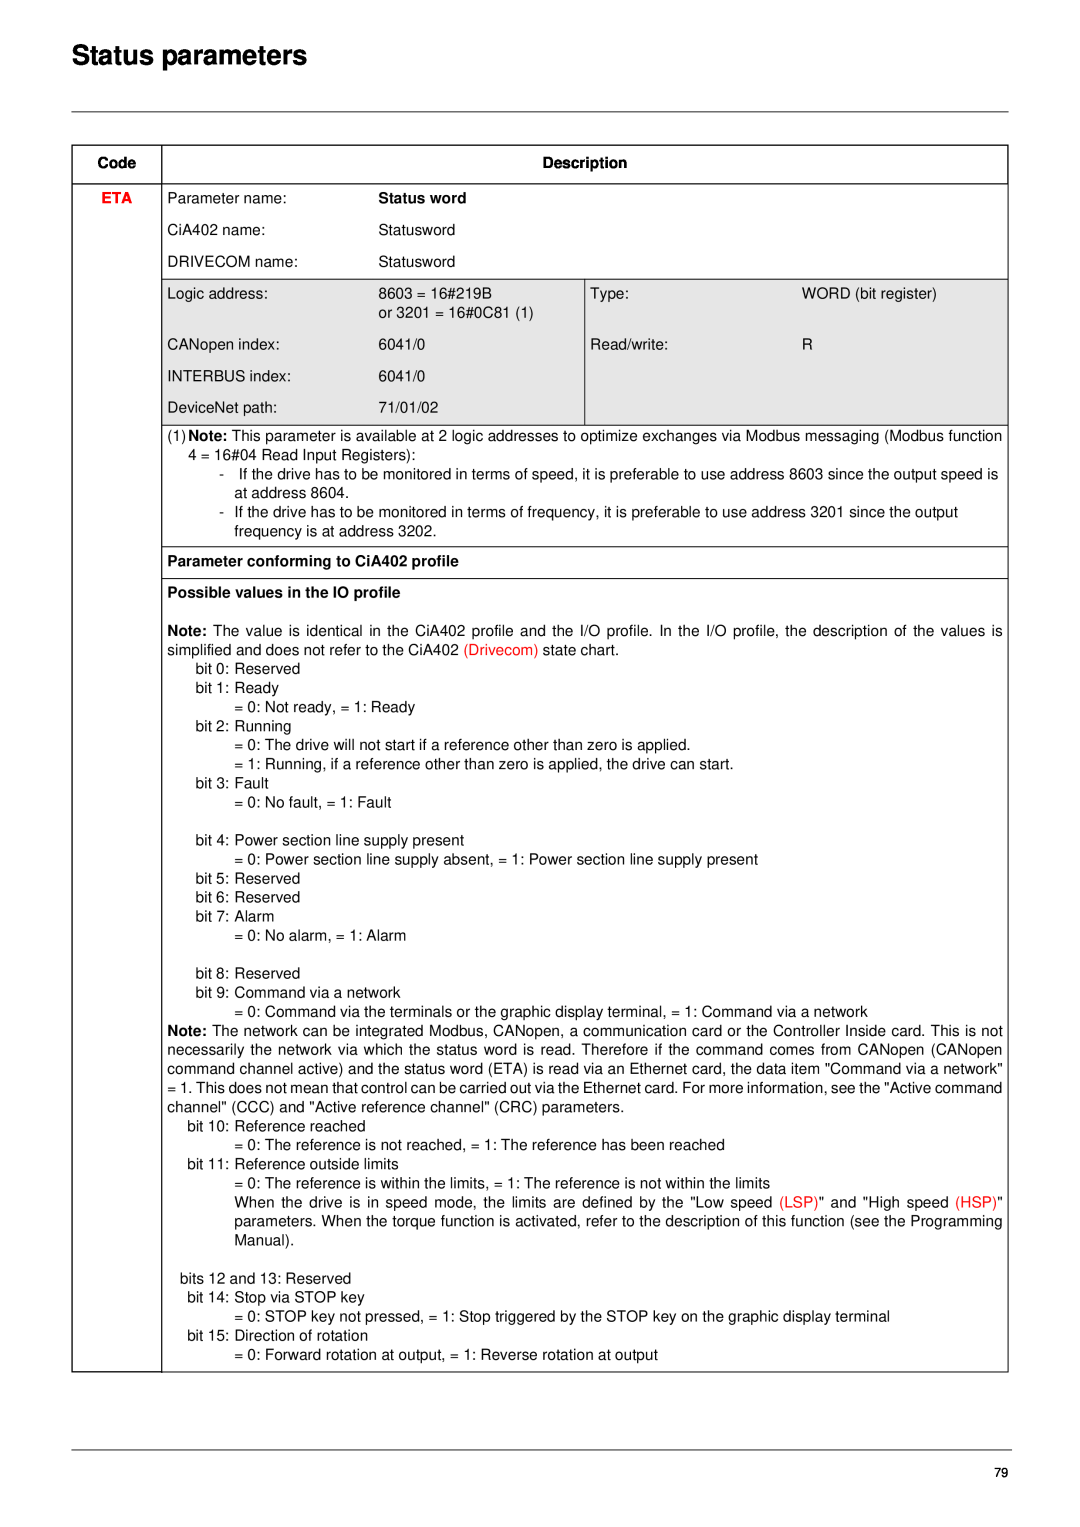 Schneider Electric 61 user manual Status parameters, Description, Status word, Parameter conforming to CiA402 profile 